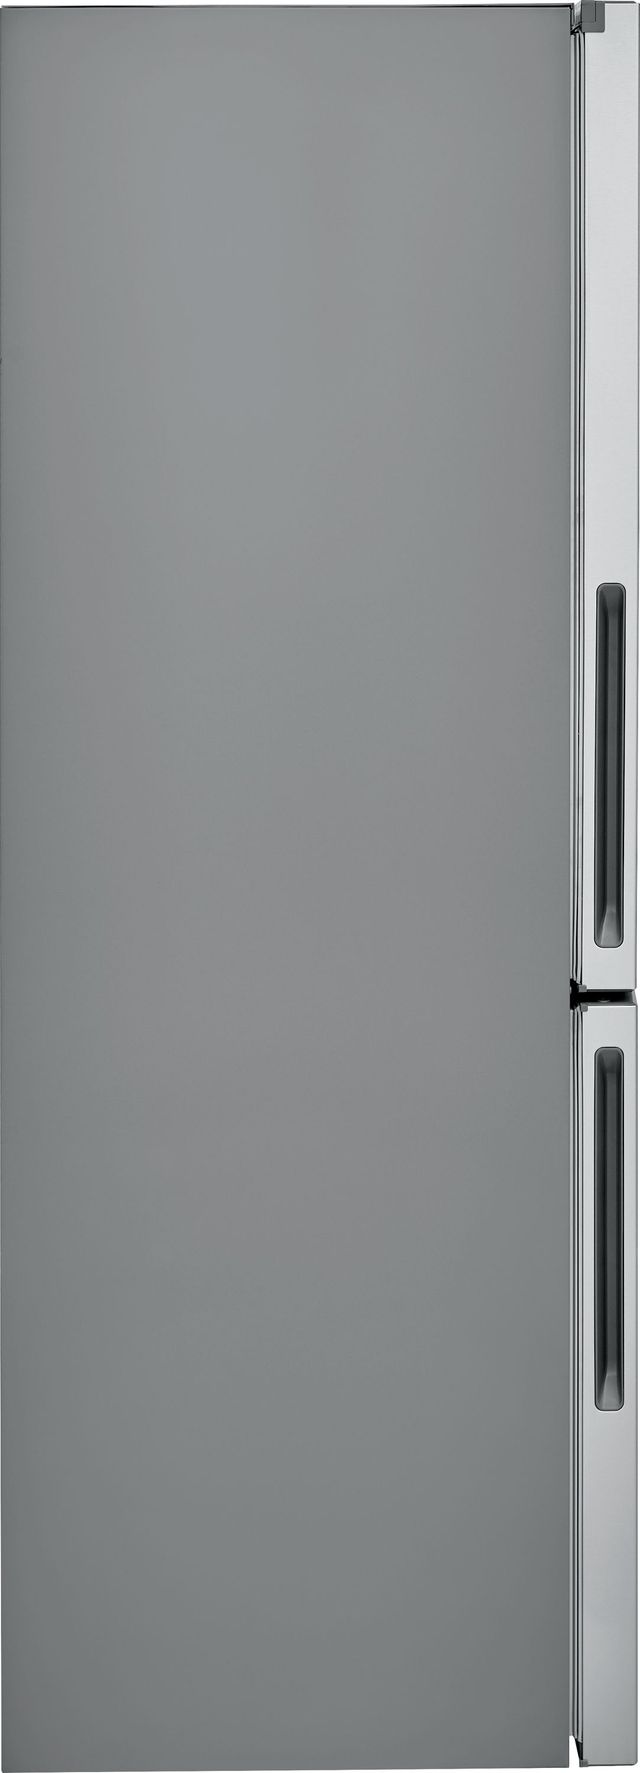 Electrolux Kitchen 11.8 Cu. Ft. Stainless Steel Bottom Freezer Refrigerator 6